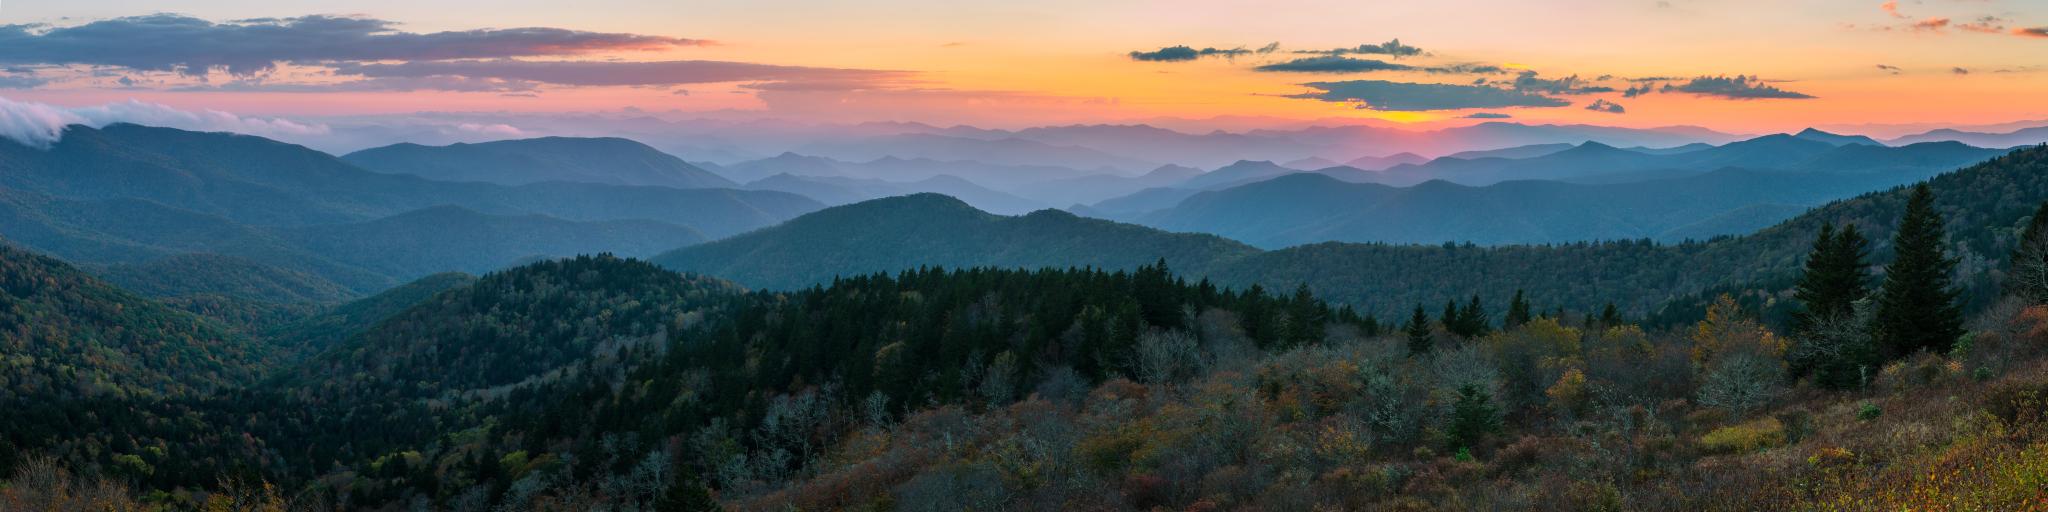 Panoramic sunset over the Blue Ridge Mountains of North Carolina